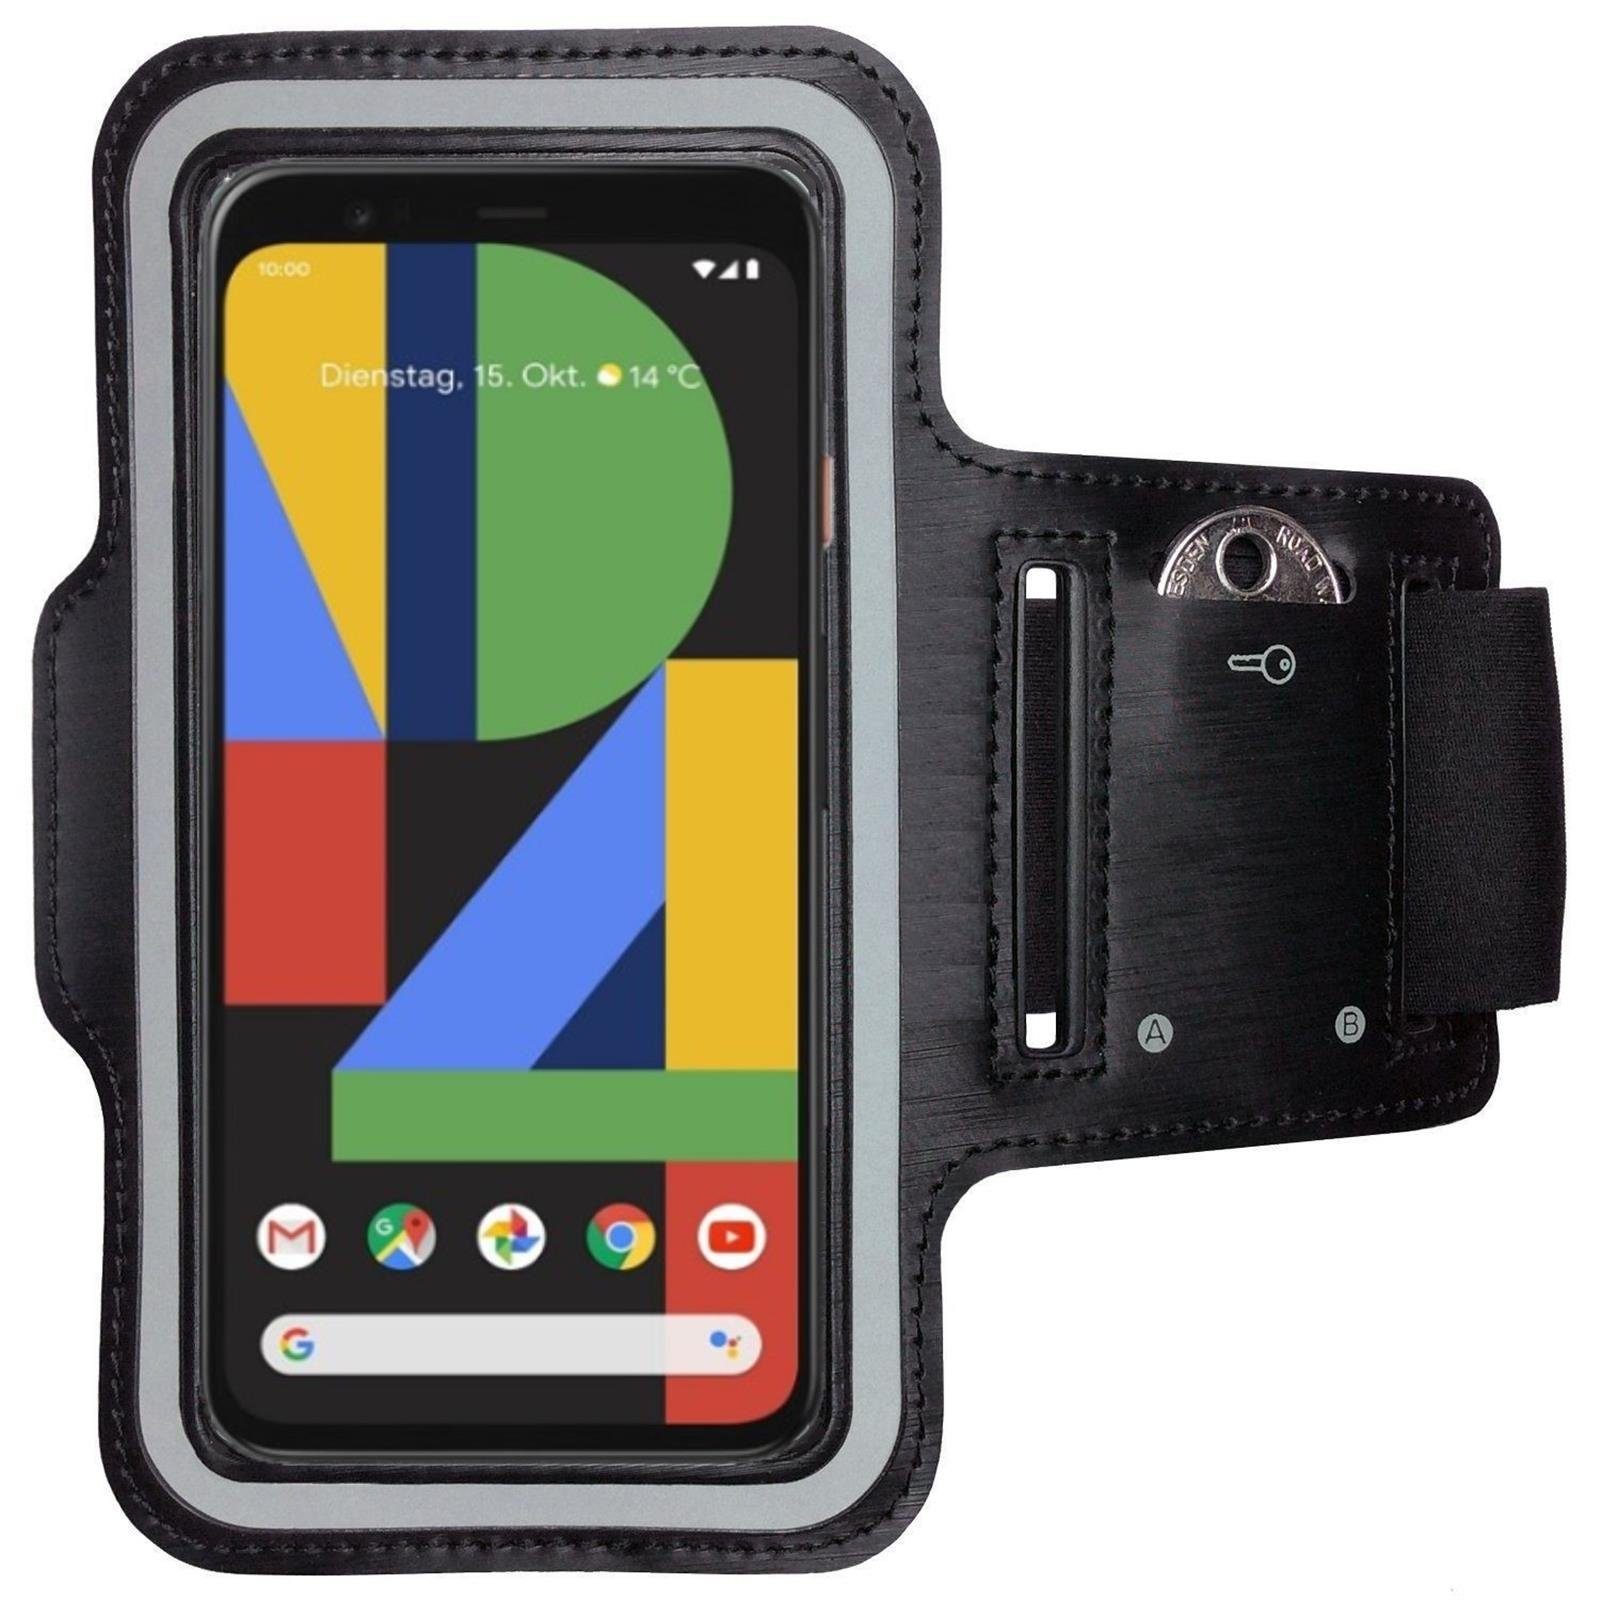 4 für Handyhülle Google Etui Fitness CoverKingz Handy, Sport Sport Handyhülle Hülle Schlüsselfach Schutzhülle Schutztasche Jogging Armband Sportarmband Pixel